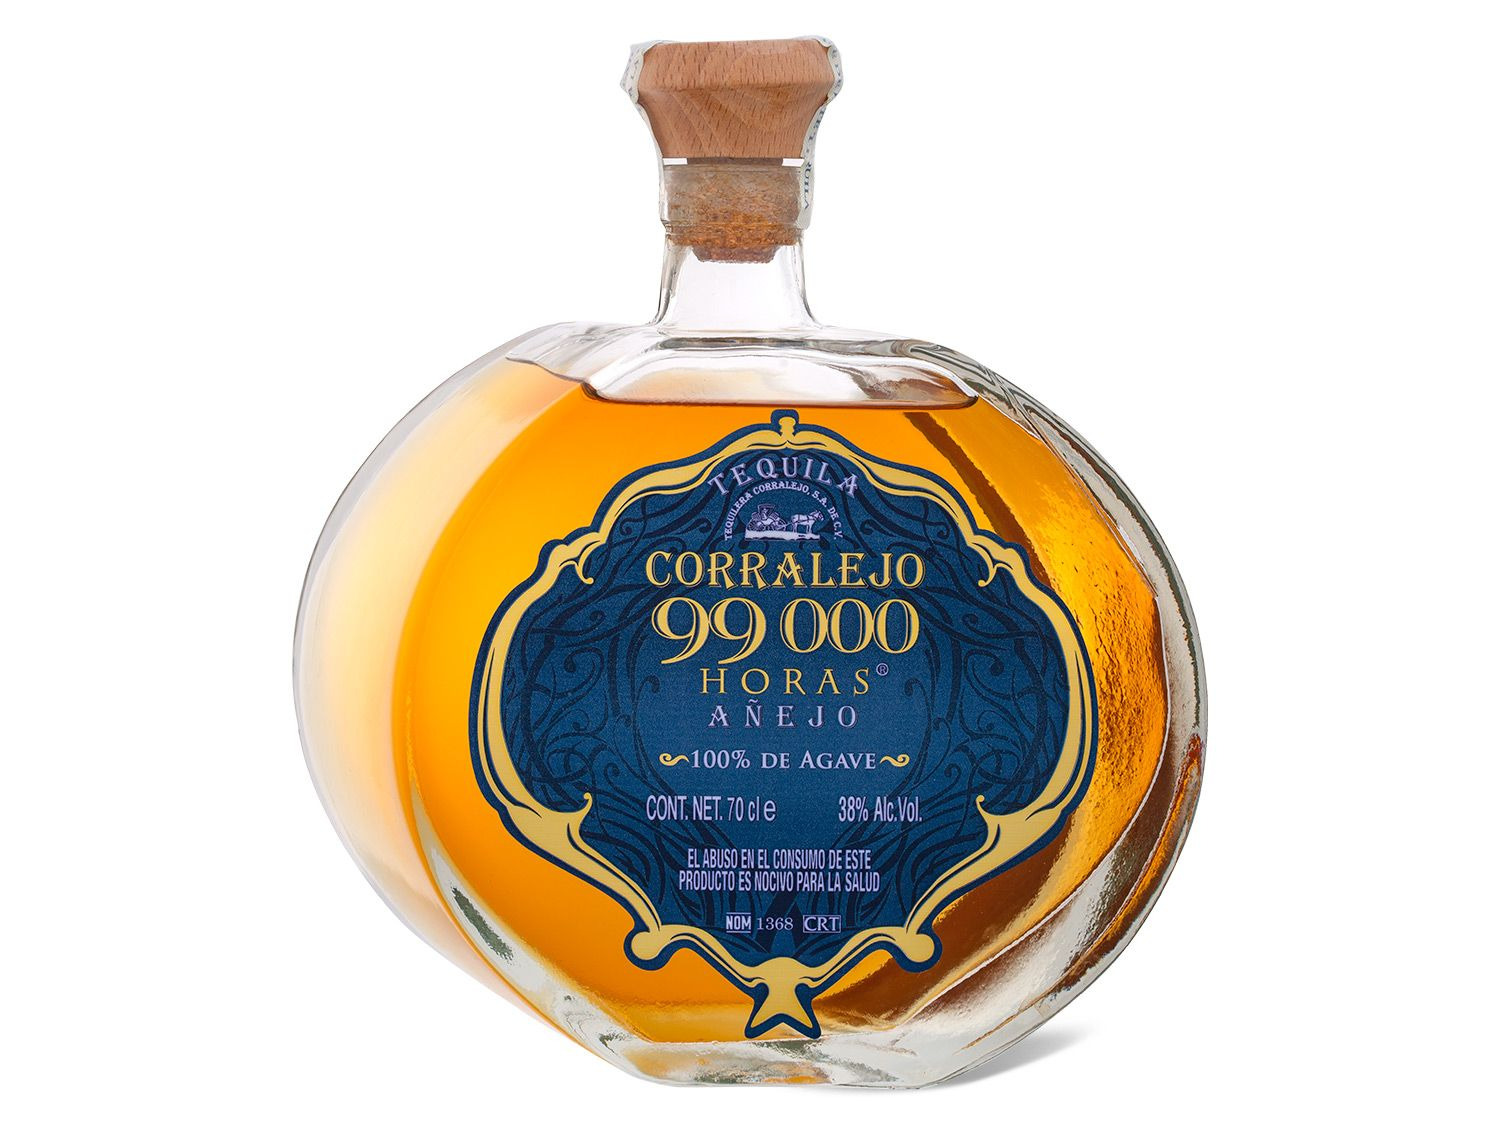 Corralejo Tequila LIDL Vol Horas 38% Añejo 99.000 